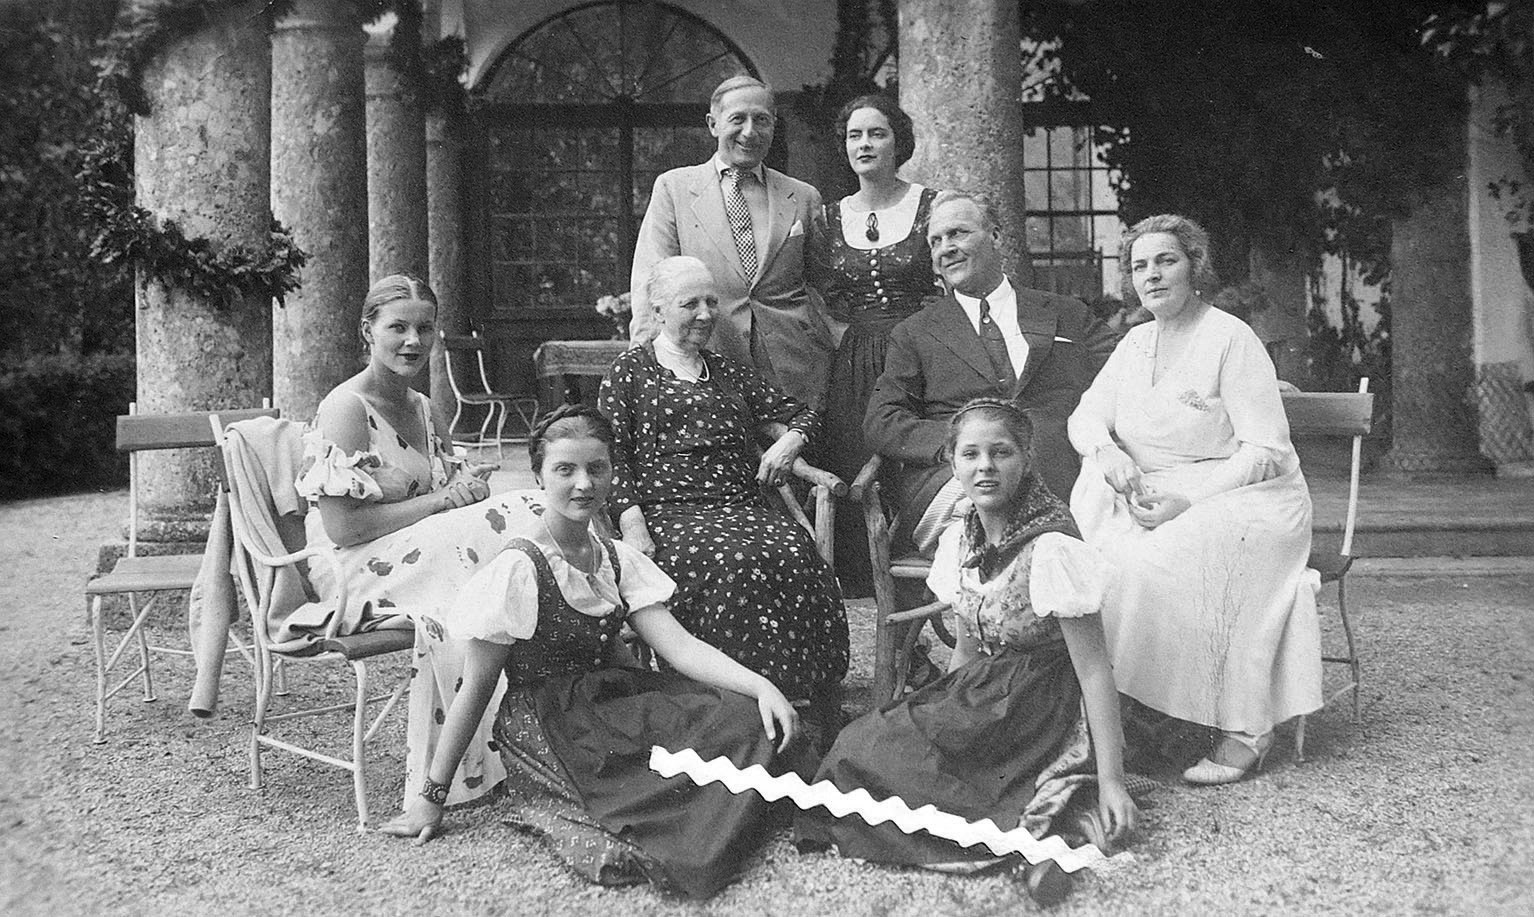 La familia de Shaliapin. Tirol. Kitzbuehel. 1934